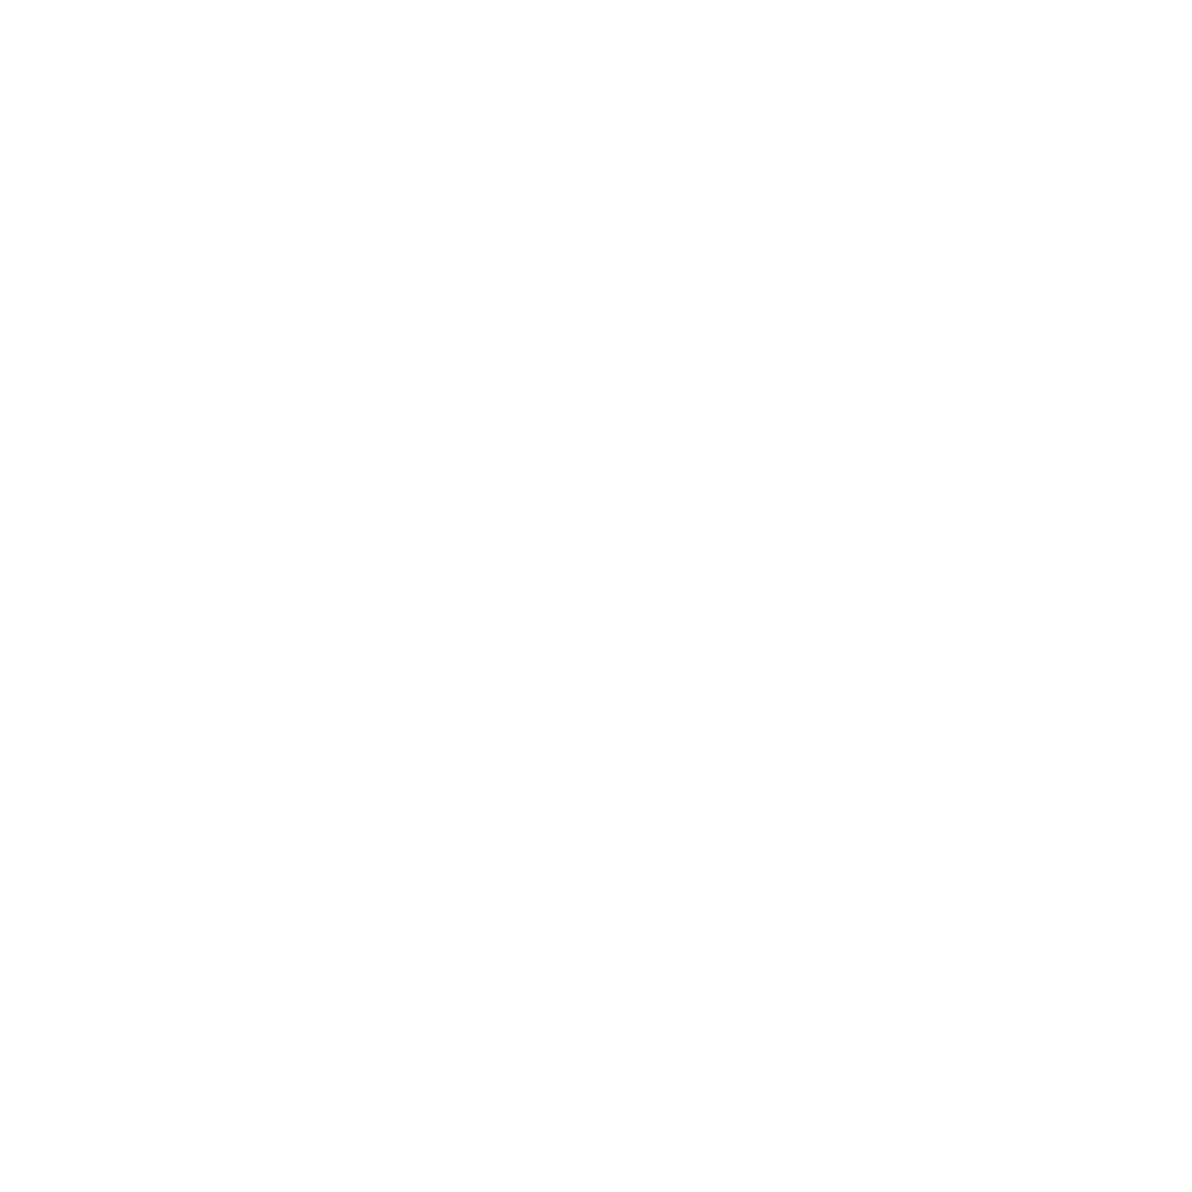 The Mermaid : His story